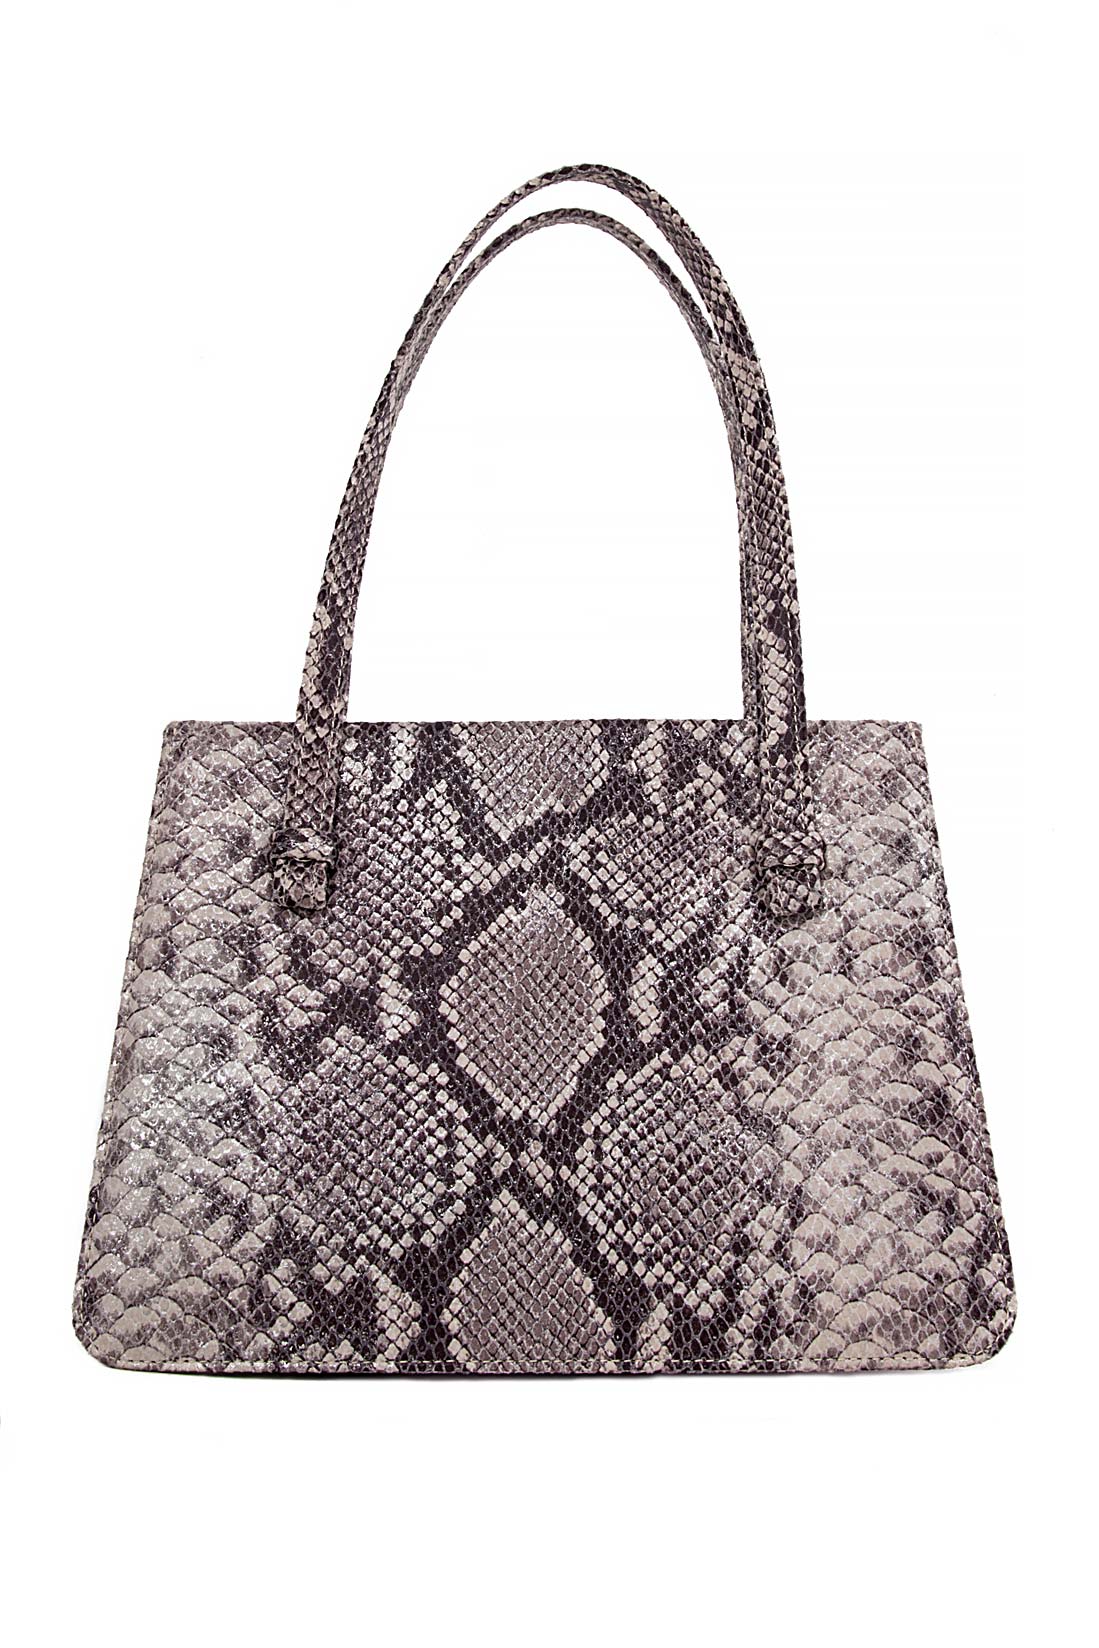 Snake-print leather bag Laura Olaru image 2